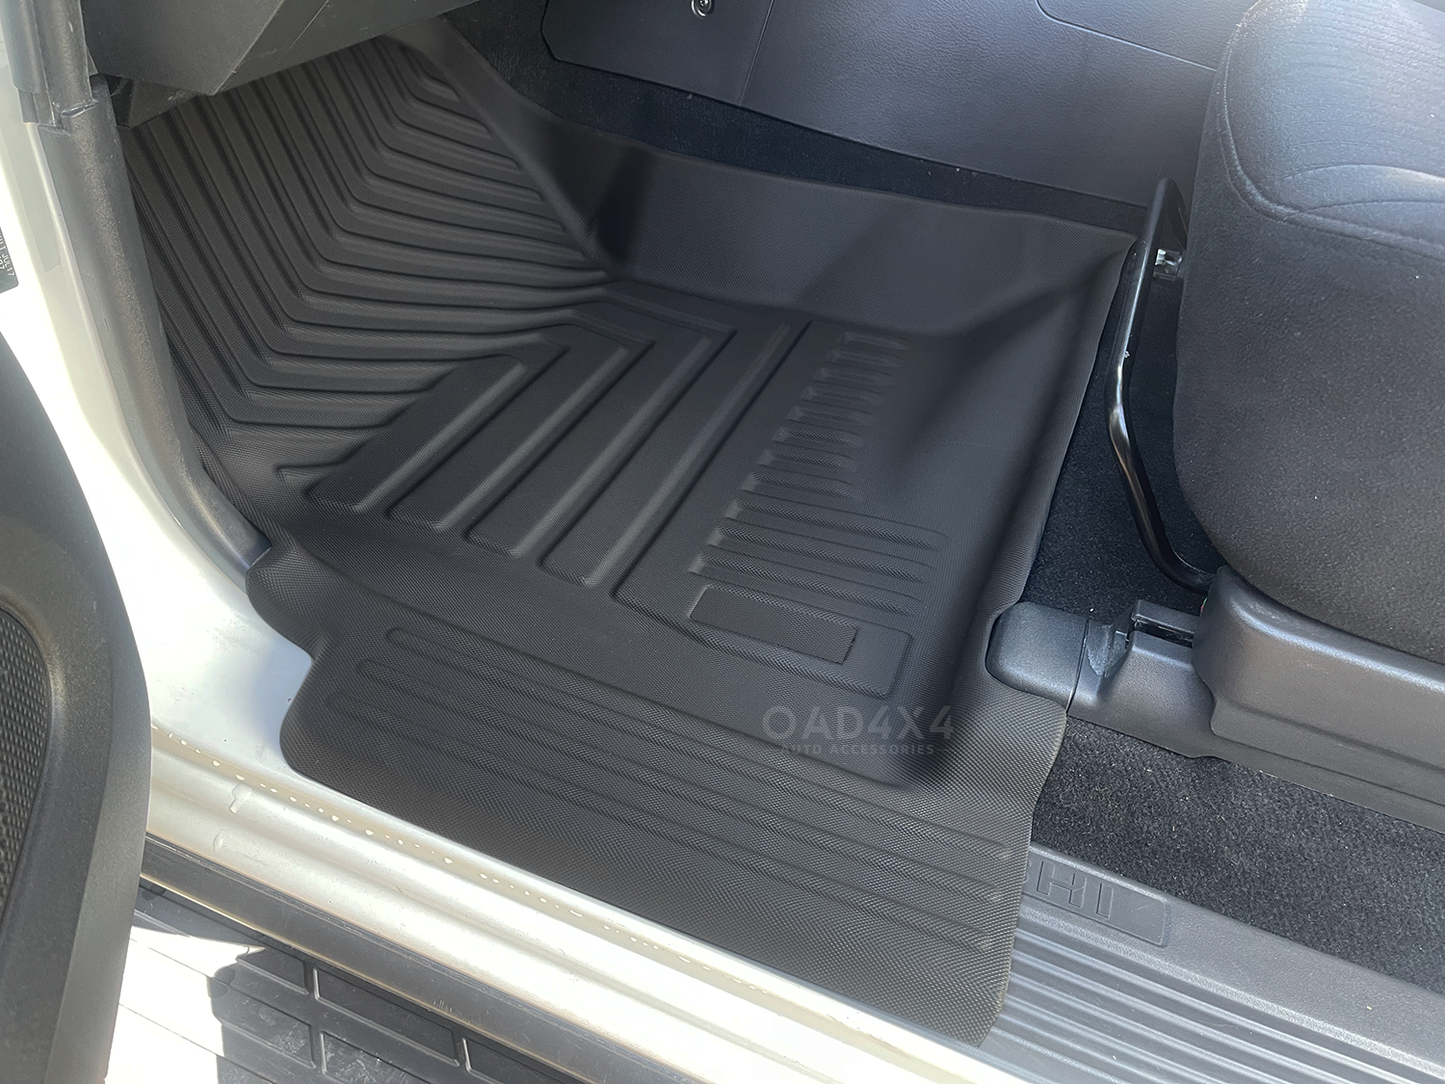 5D TPE Floor Mats for Mitsubishi Pajero 2000-Onwards Tailored Door Sill Covered Car Floor Mat Liner Car Mats